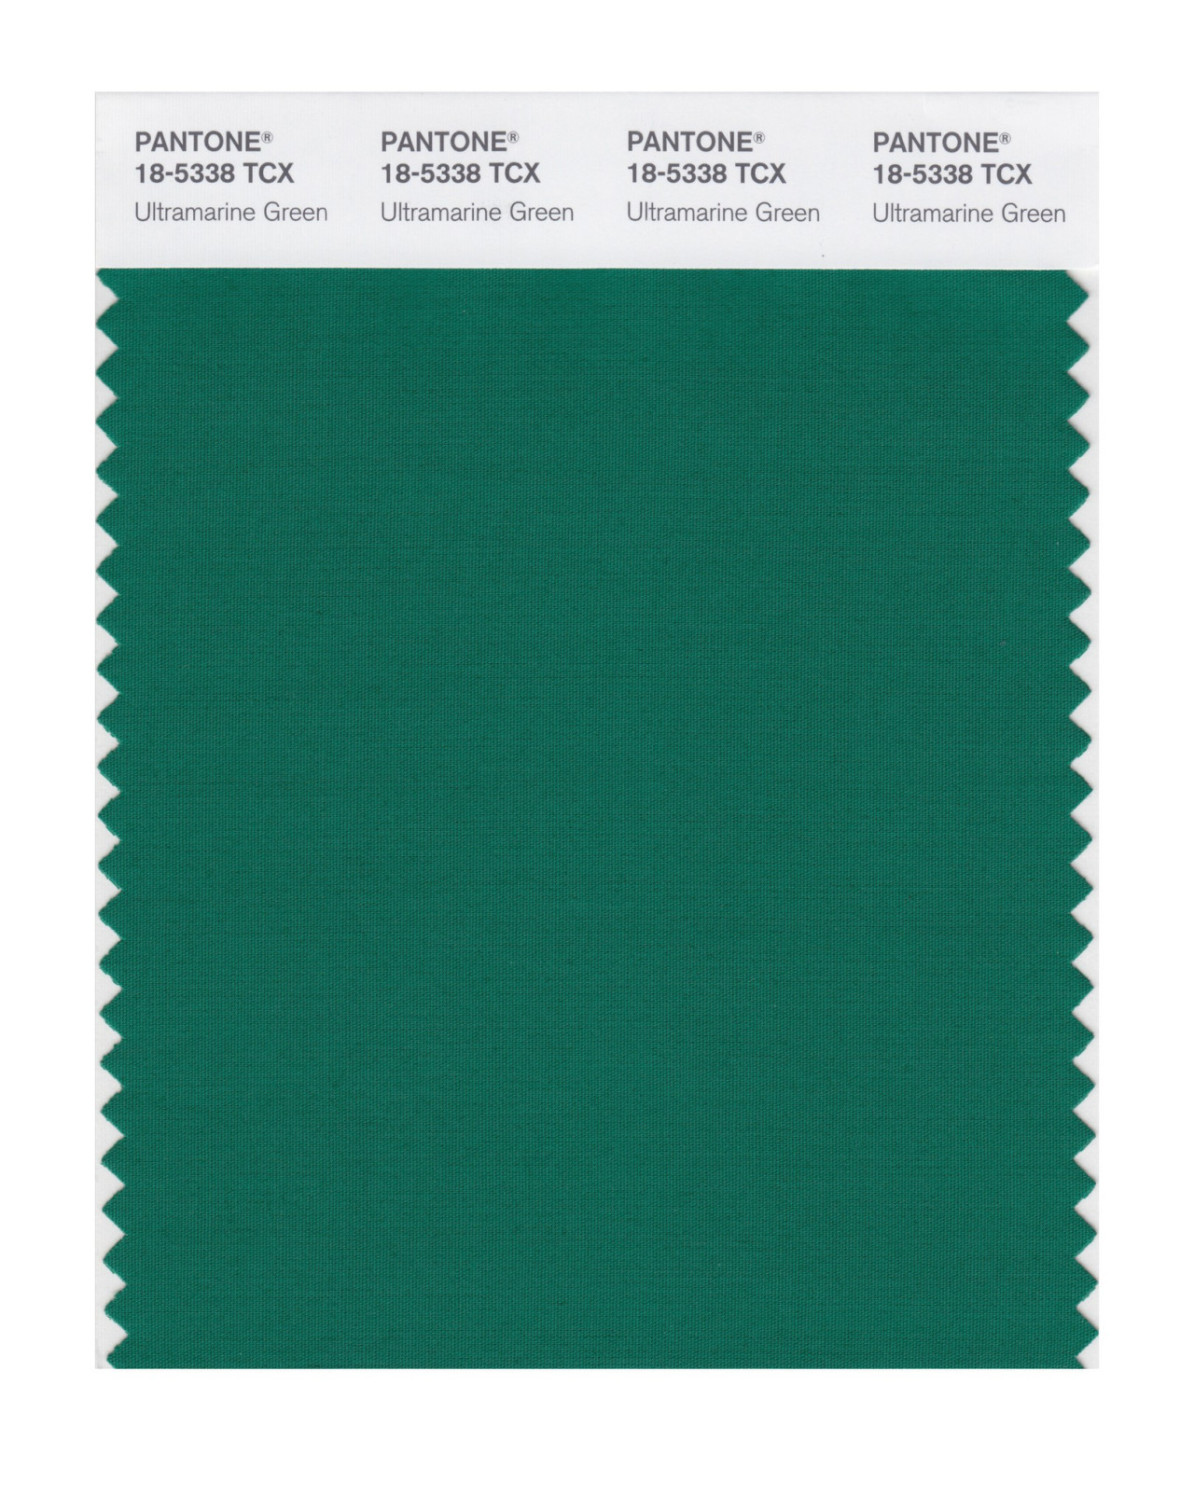 цвет Ultramarine Green — ультрамариновый зеленый